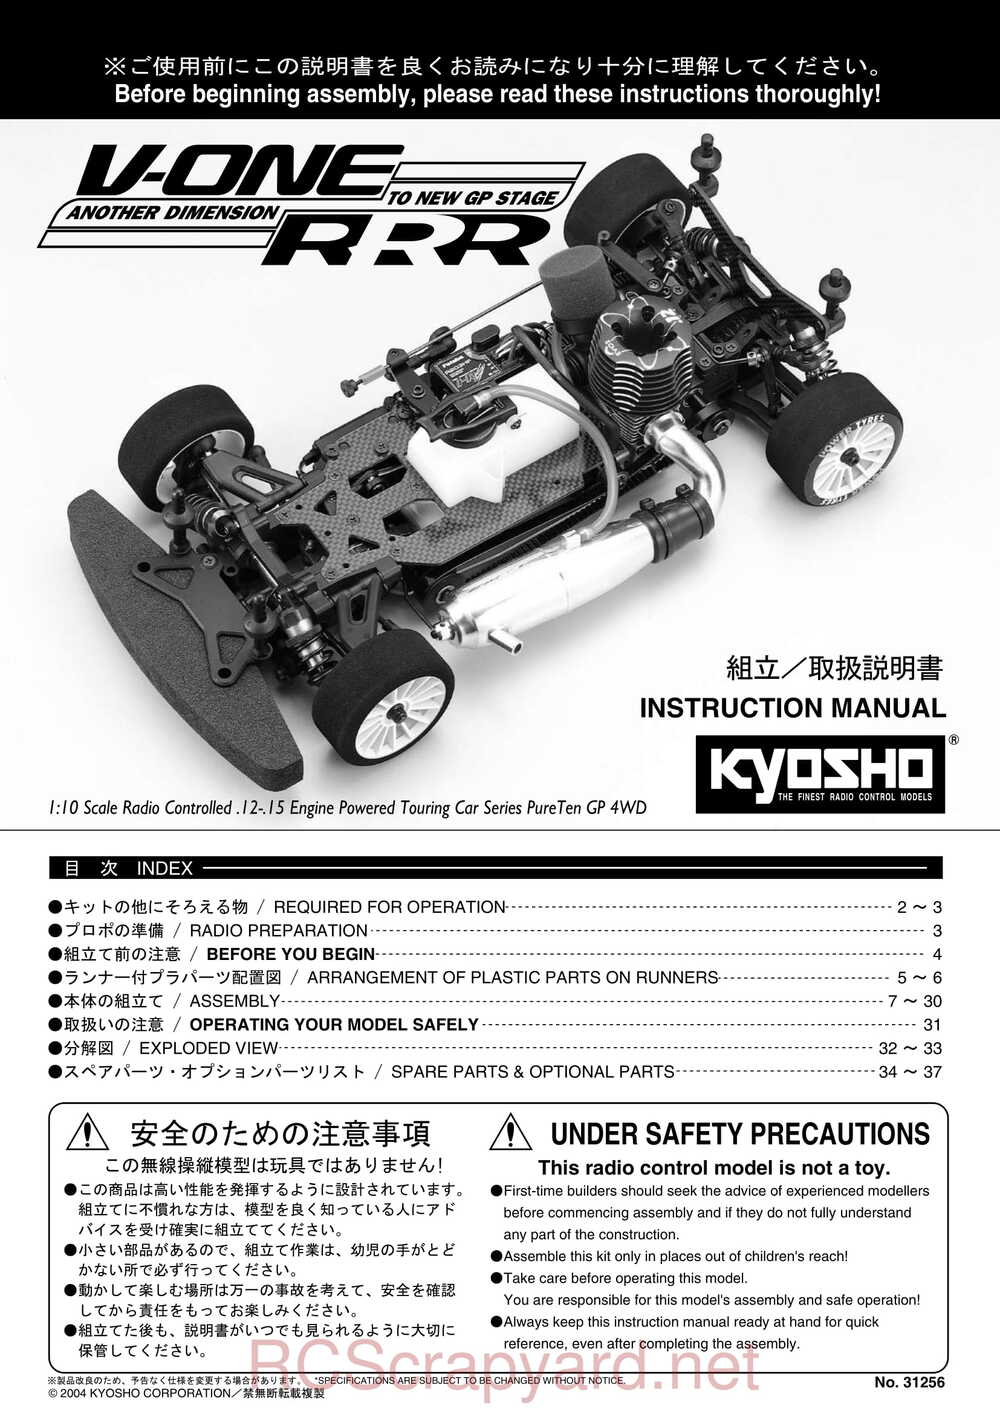 Kyosho - 31256 - V-One RRR - Manual - Page 01